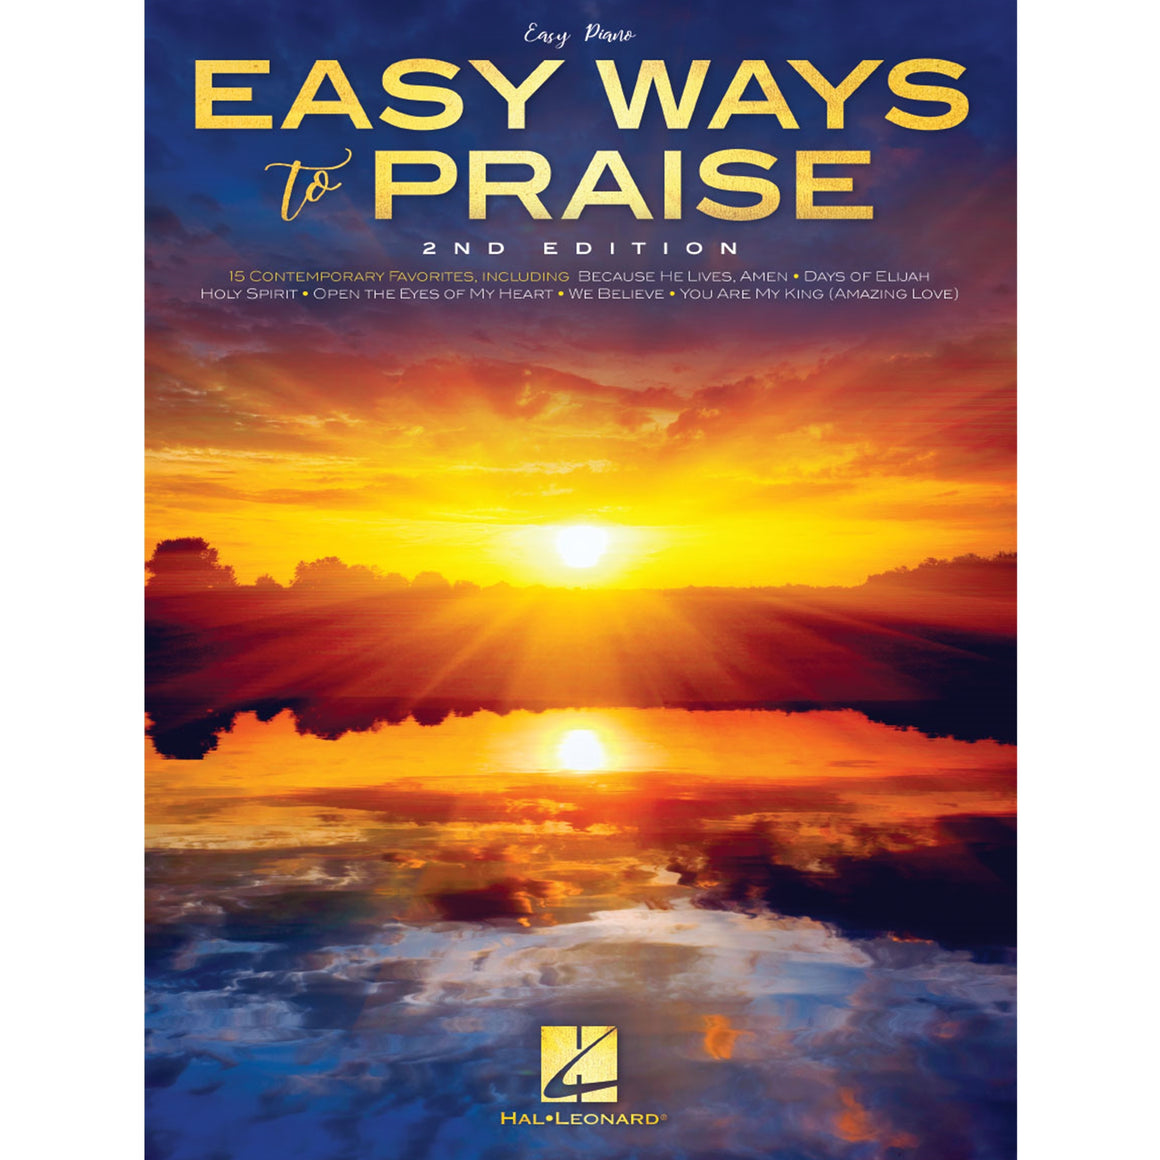 HAL LEONARD 192458 Easy Ways to Praise - 2nd Edition